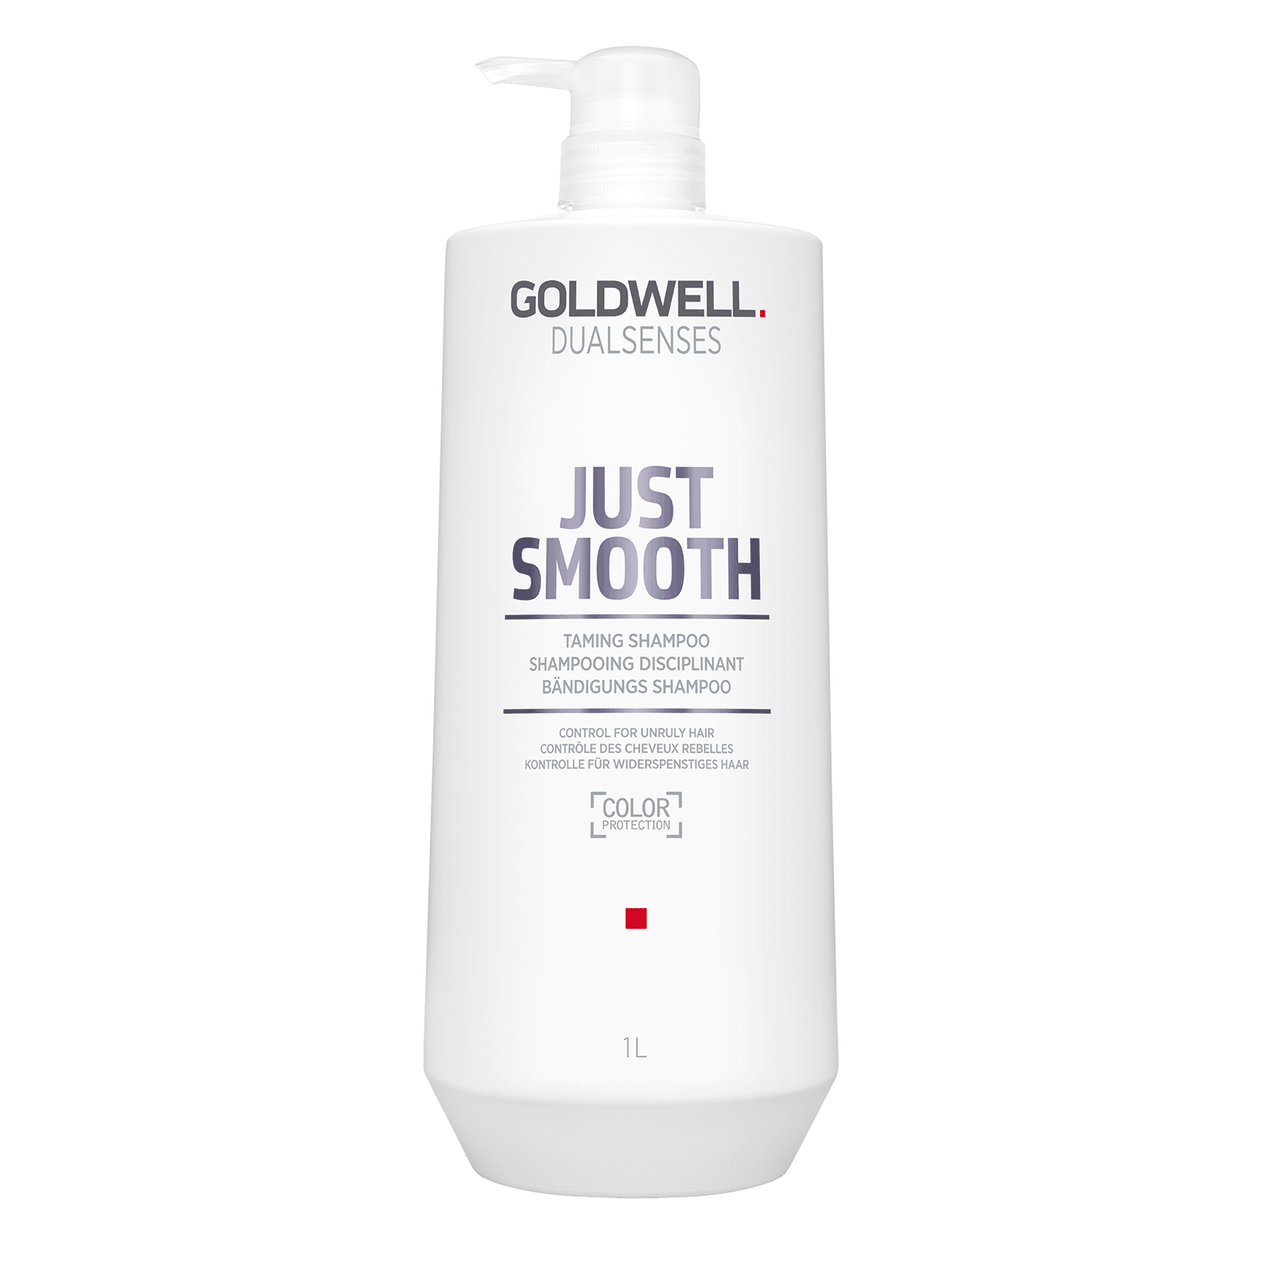 Goldwell  Dualsenses Just Smooth Taming Shampoo 1 Liter